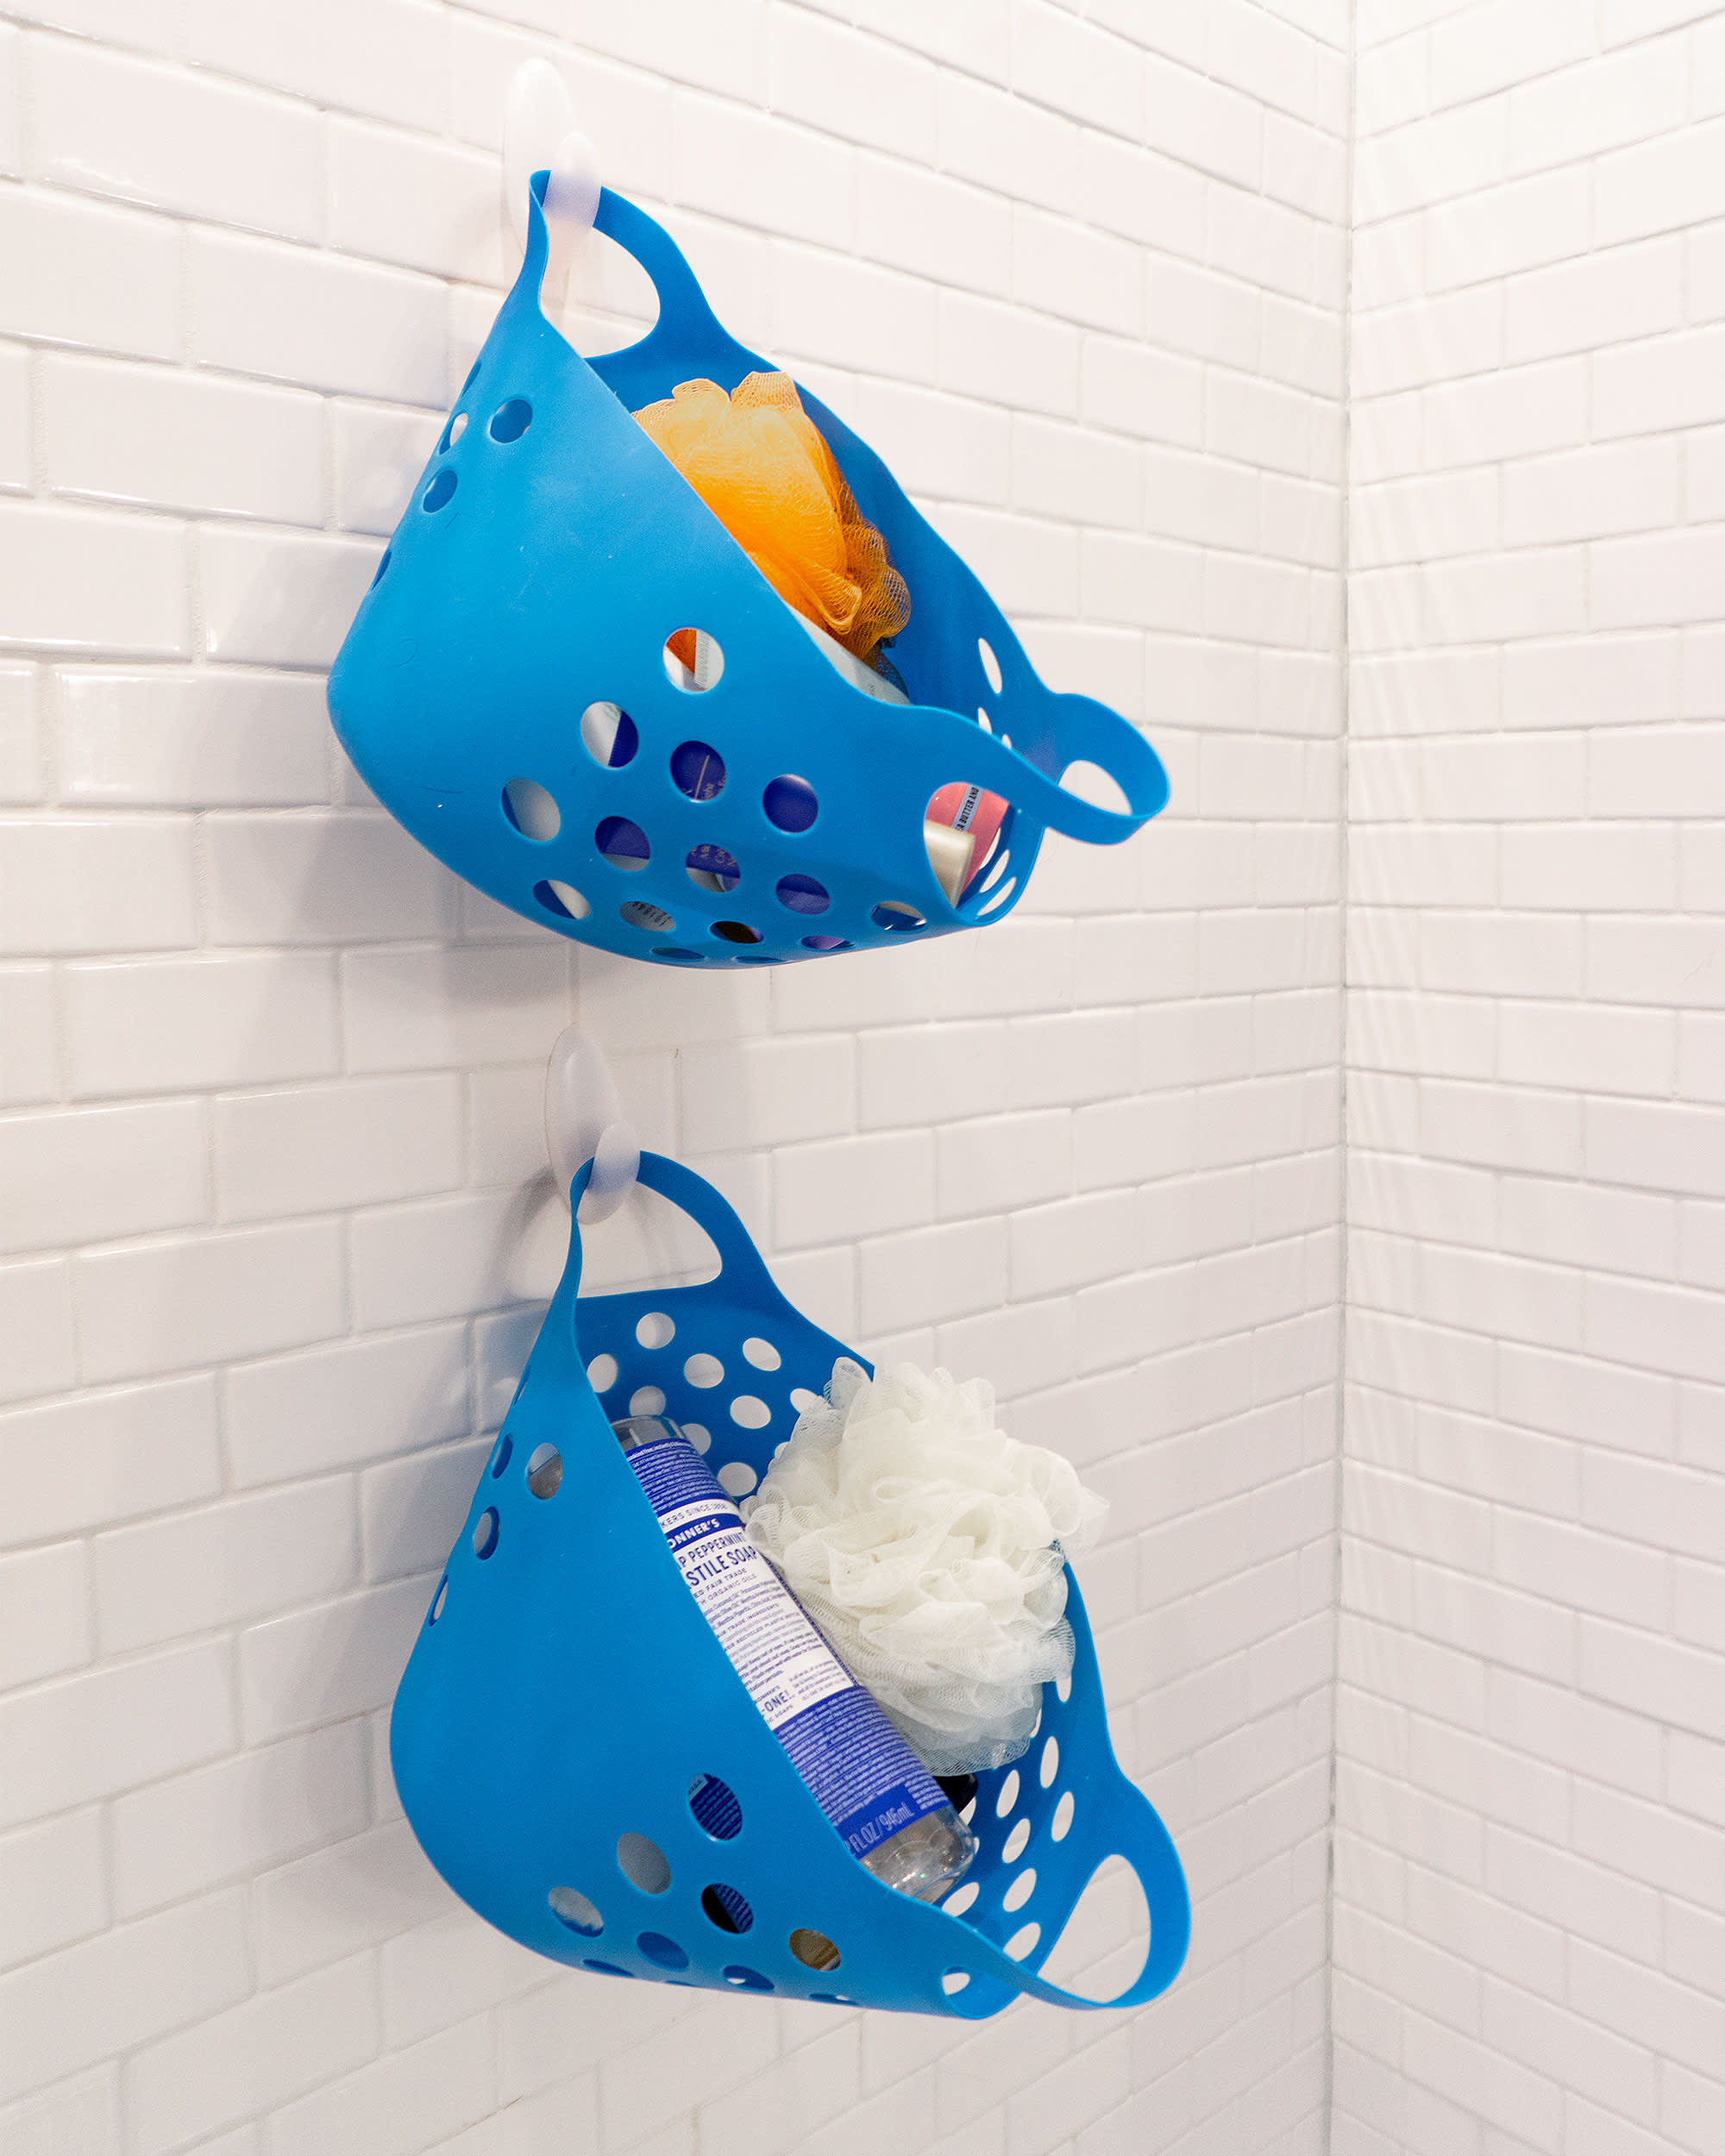 https://cdn.apartmenttherapy.info/image/upload/v1582052331/at/art/photo/2020-02/small-bathroom-tricks/small-baskets-shower.jpg